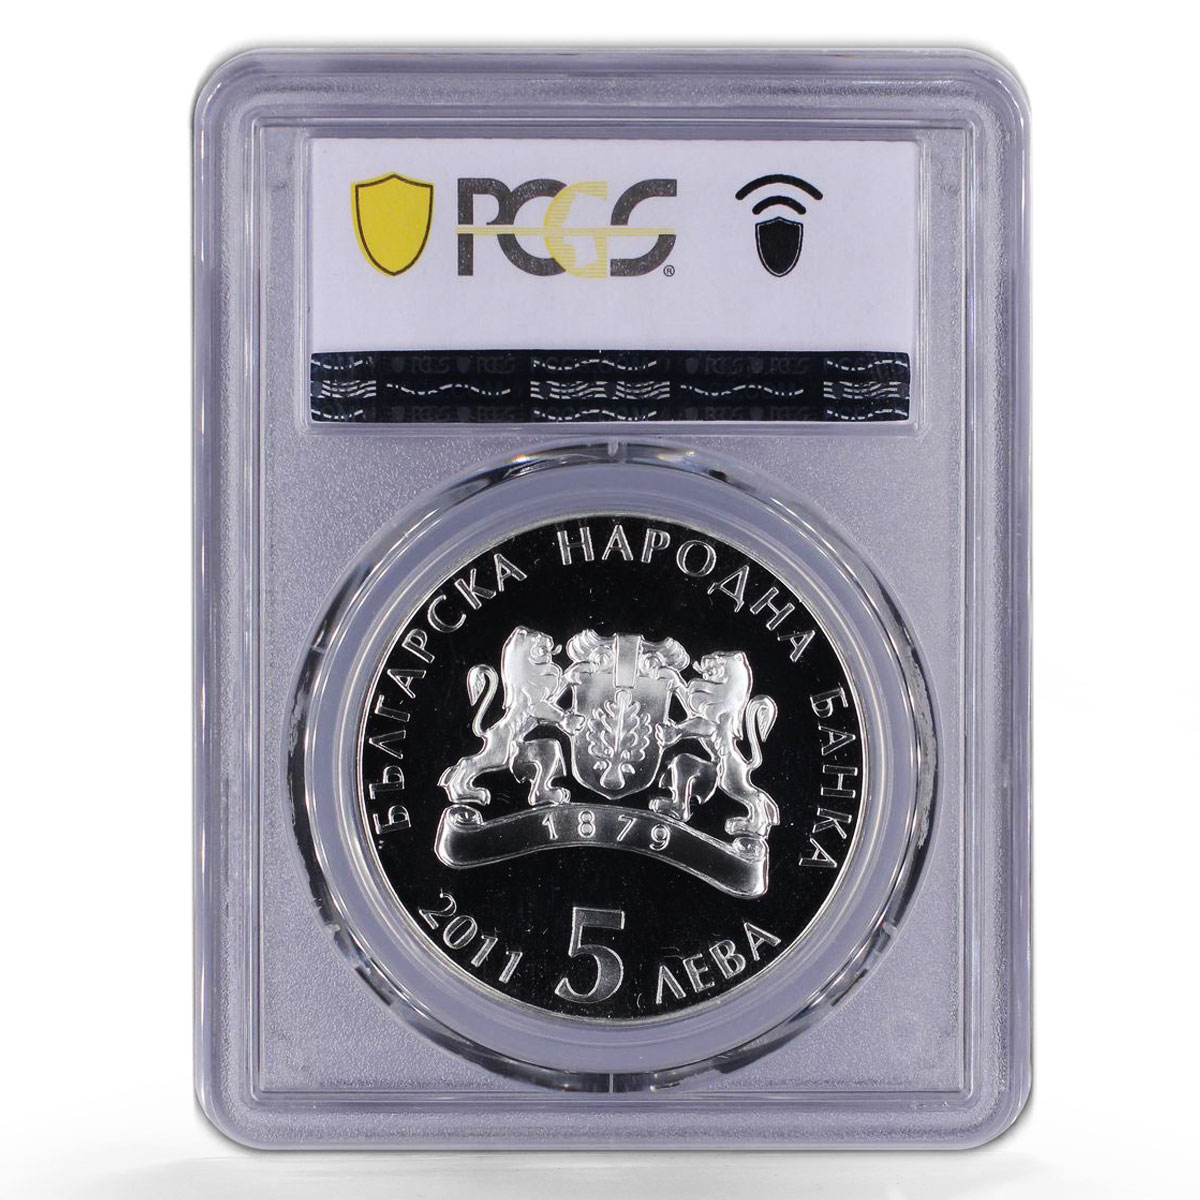 Bulgaria 5 leva Folk Tales Kose Bose Literature PR67 PCGS silver coin 2011